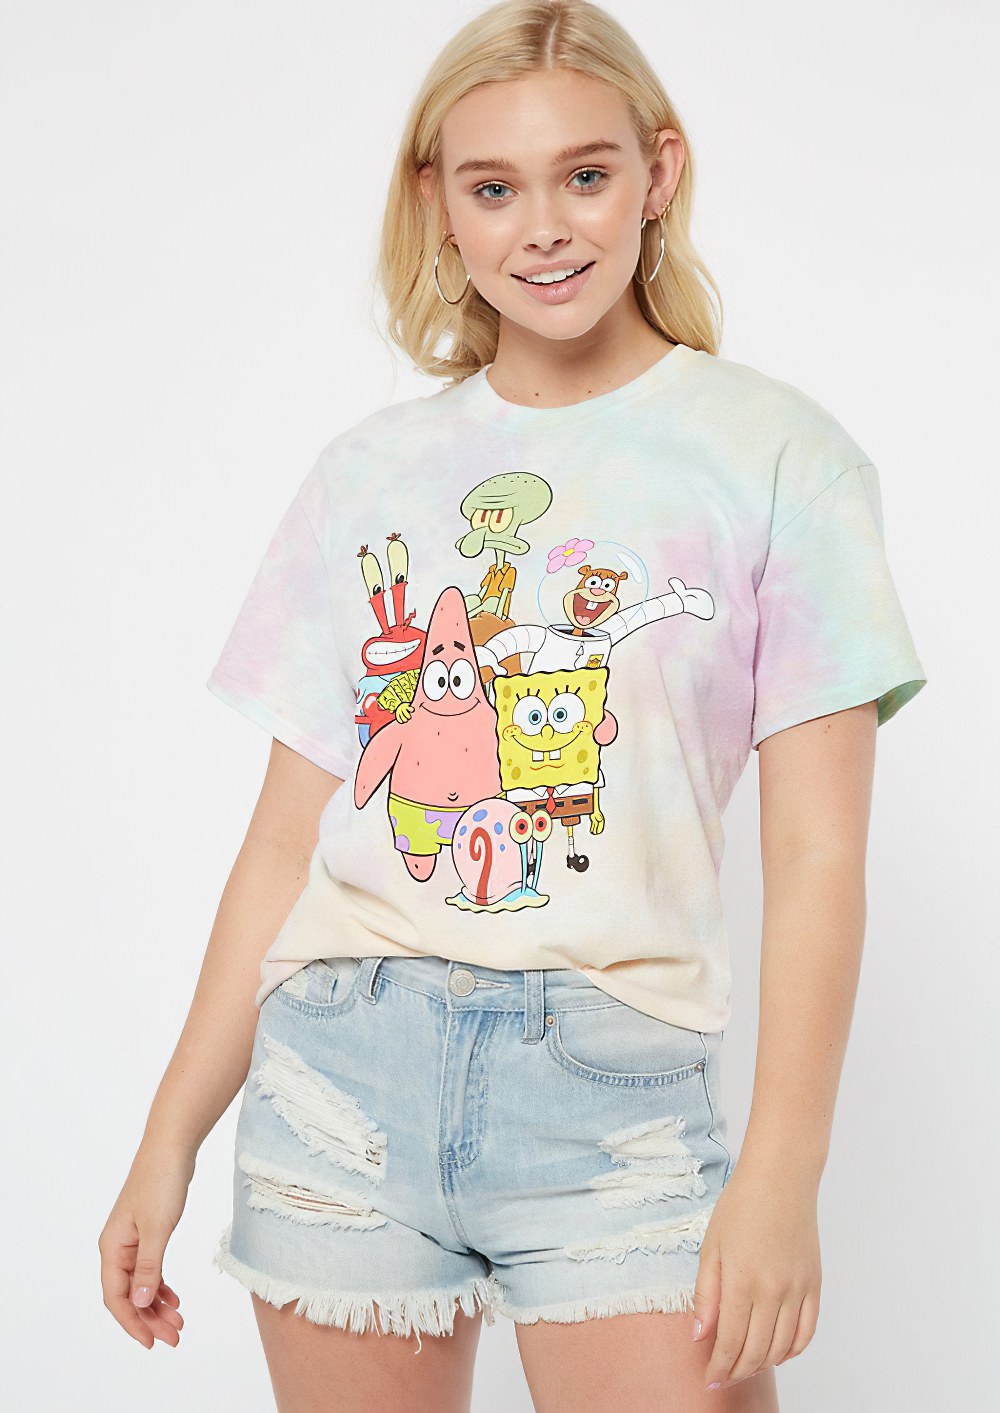 Gangster Spongebob Esponja With Friends 3d Shirt Plus Size Up To 5xl